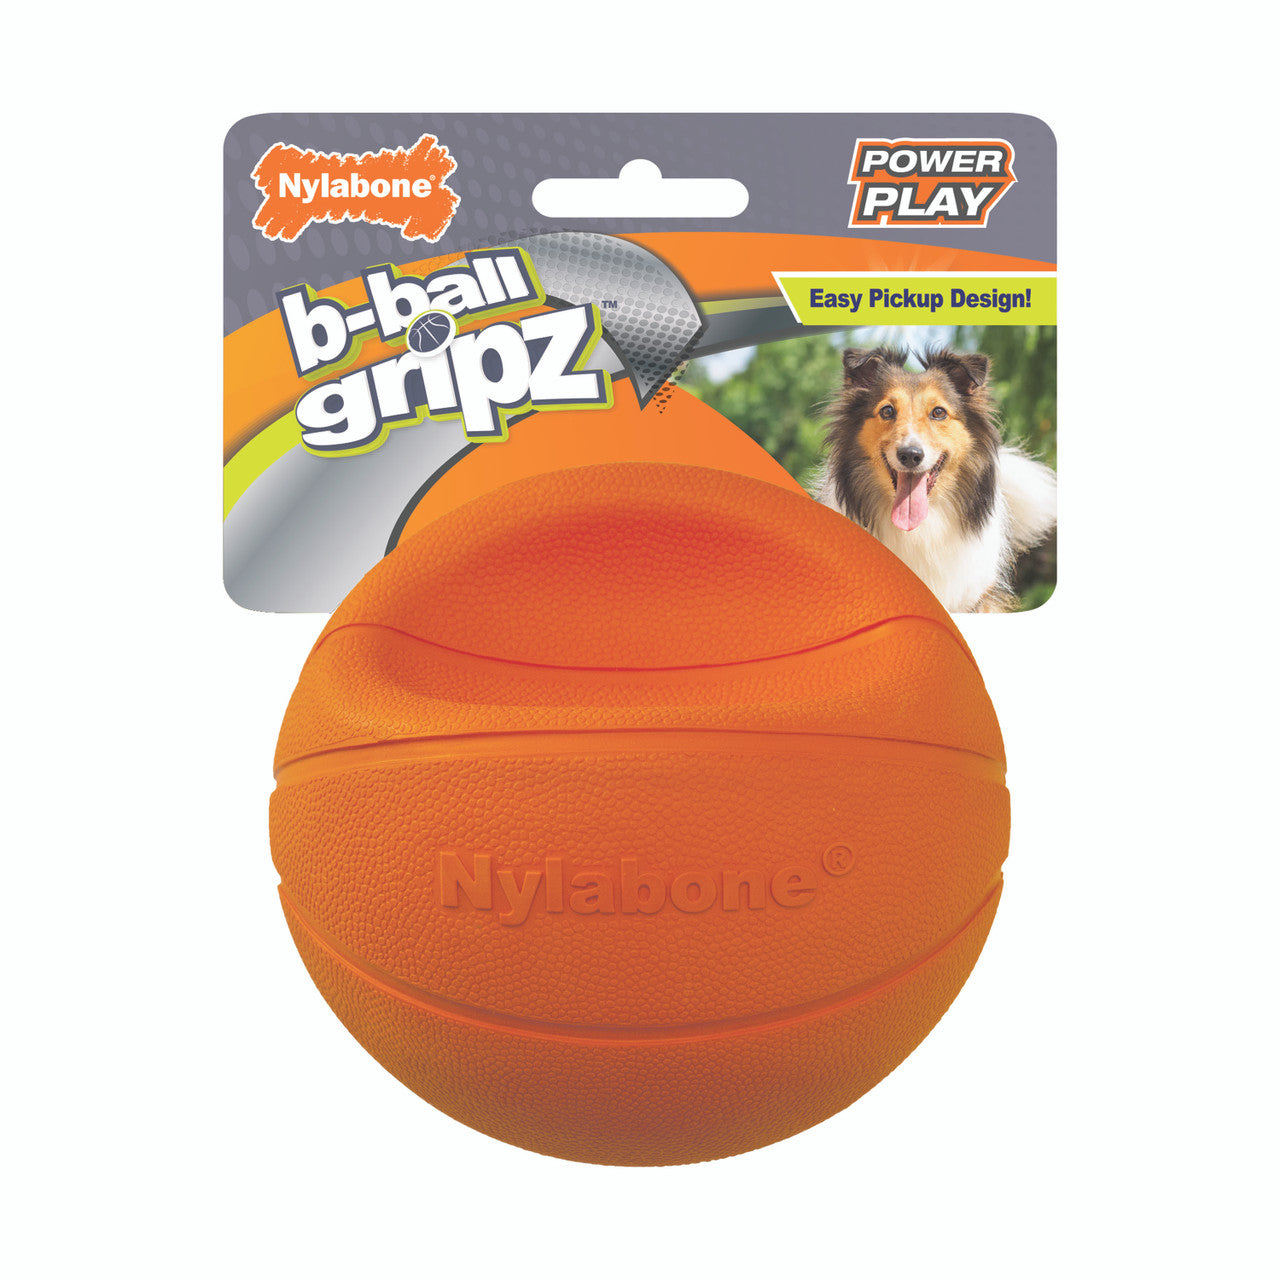 Nylabone Power Play Dog Basketball B-Ball Gripz Medium (1 Count)